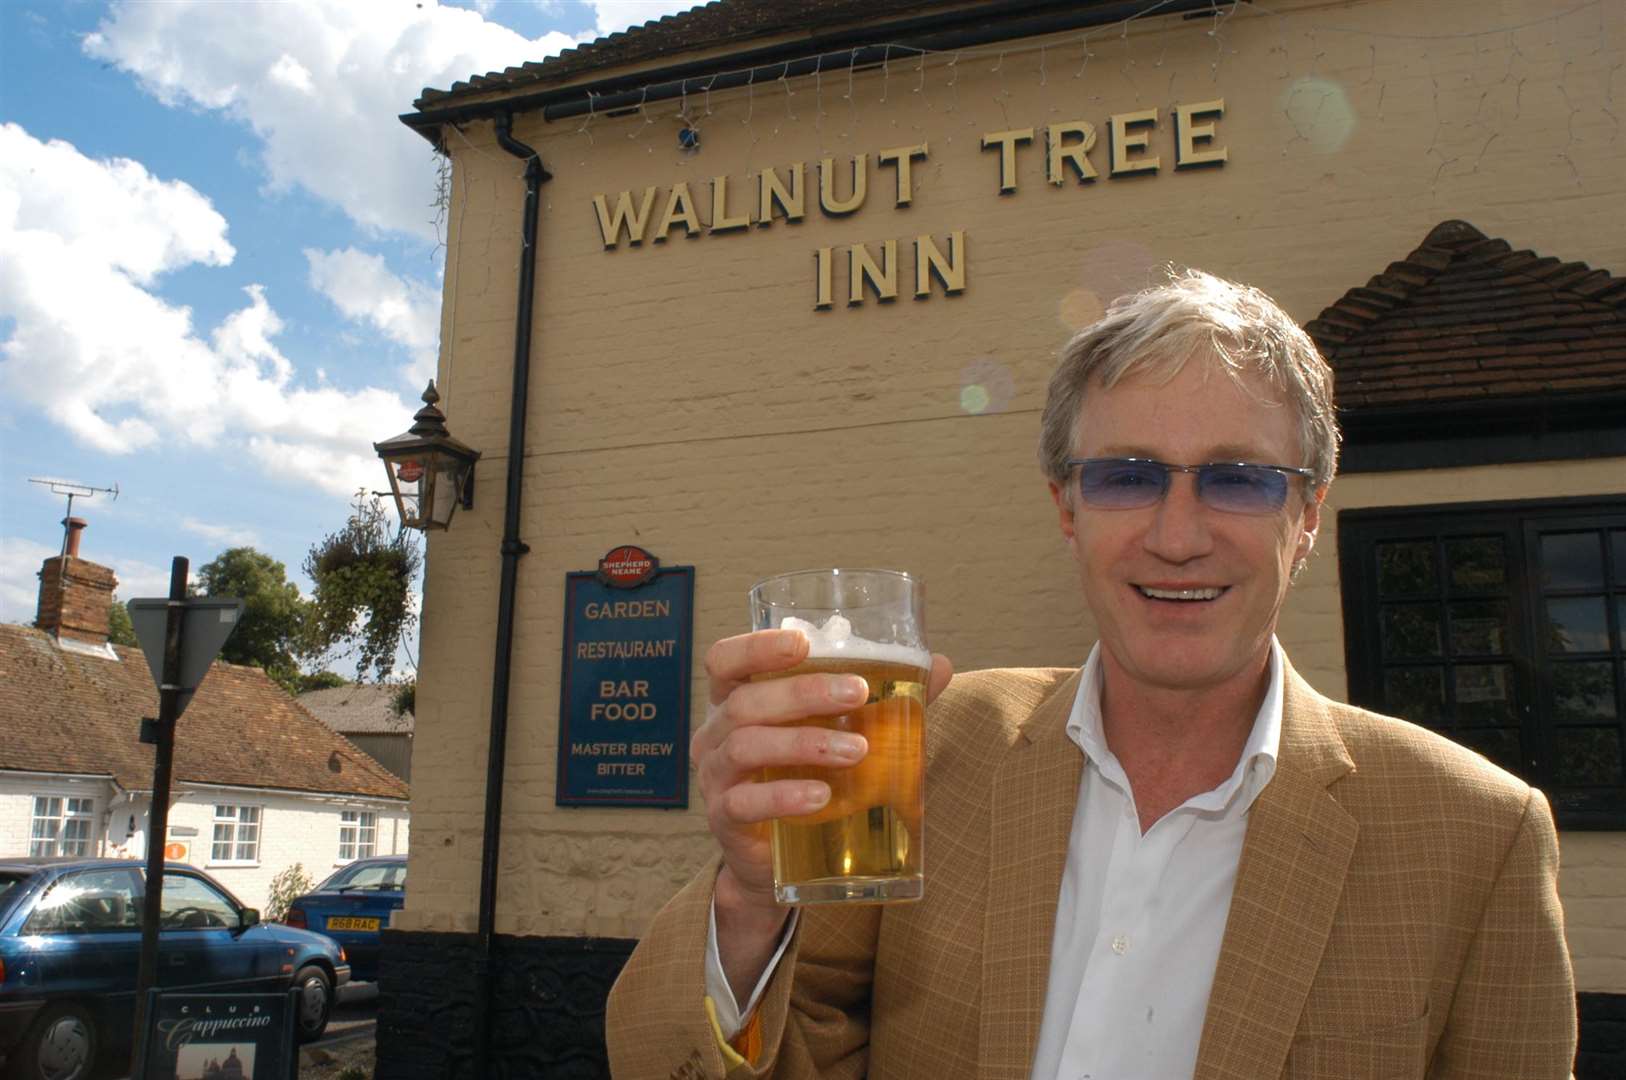 Paul O'Grady at this local pub Walnut Tree